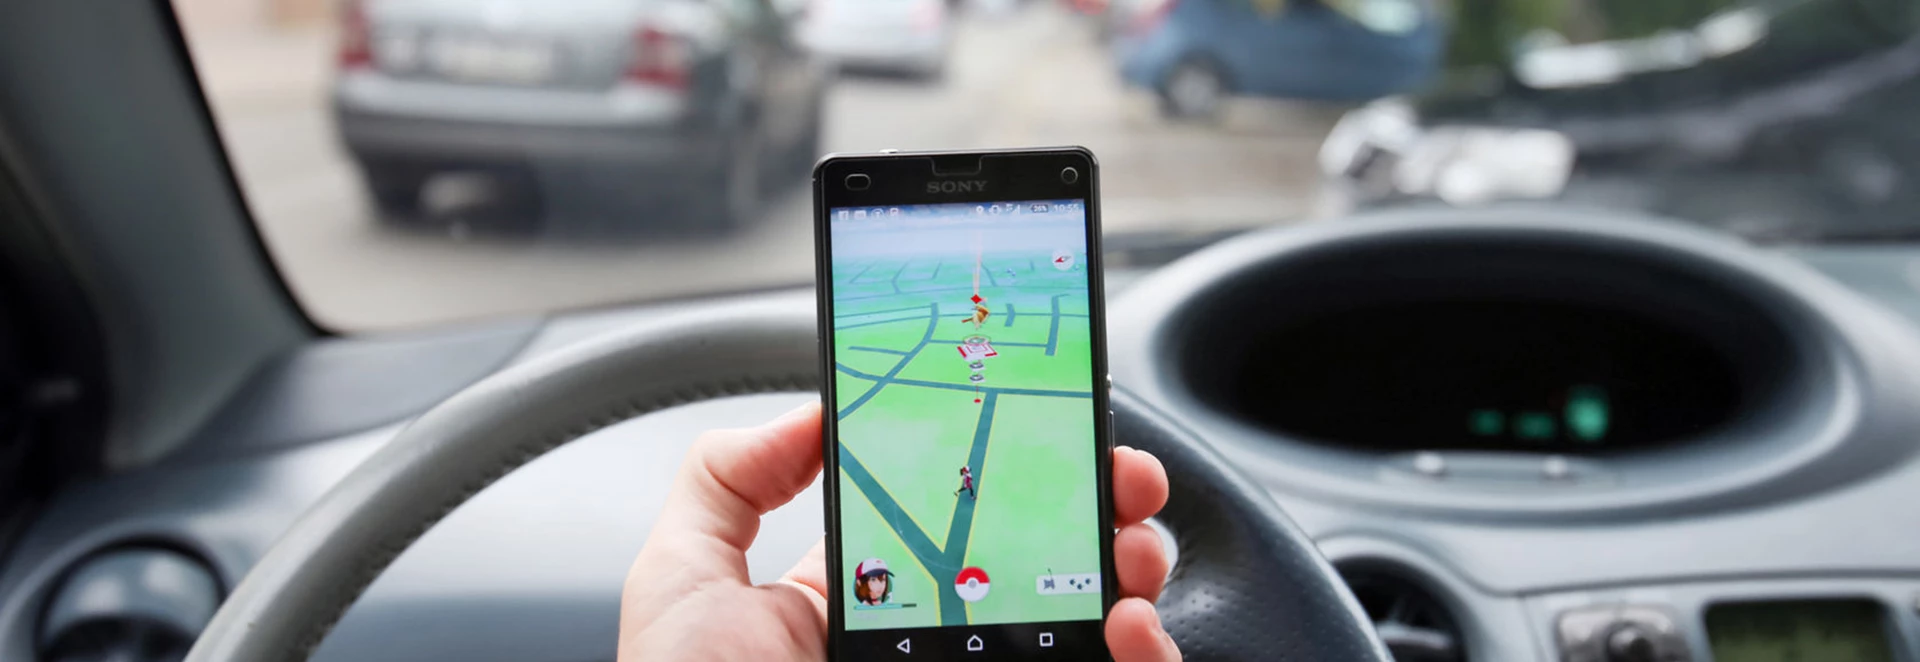 Pokémon GO is already making driving more dangerous 